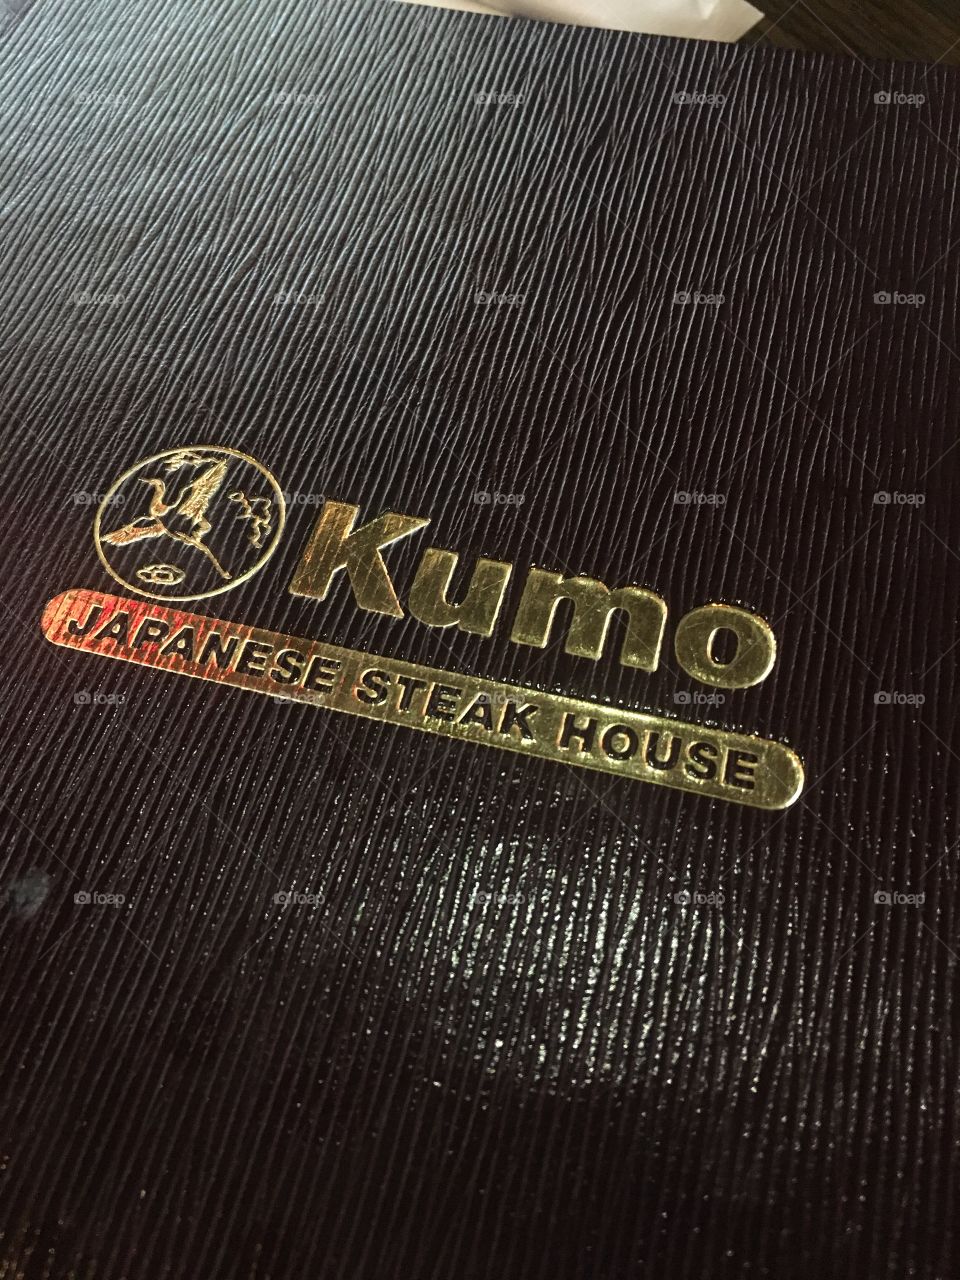 Kumo Japanese restaurant 